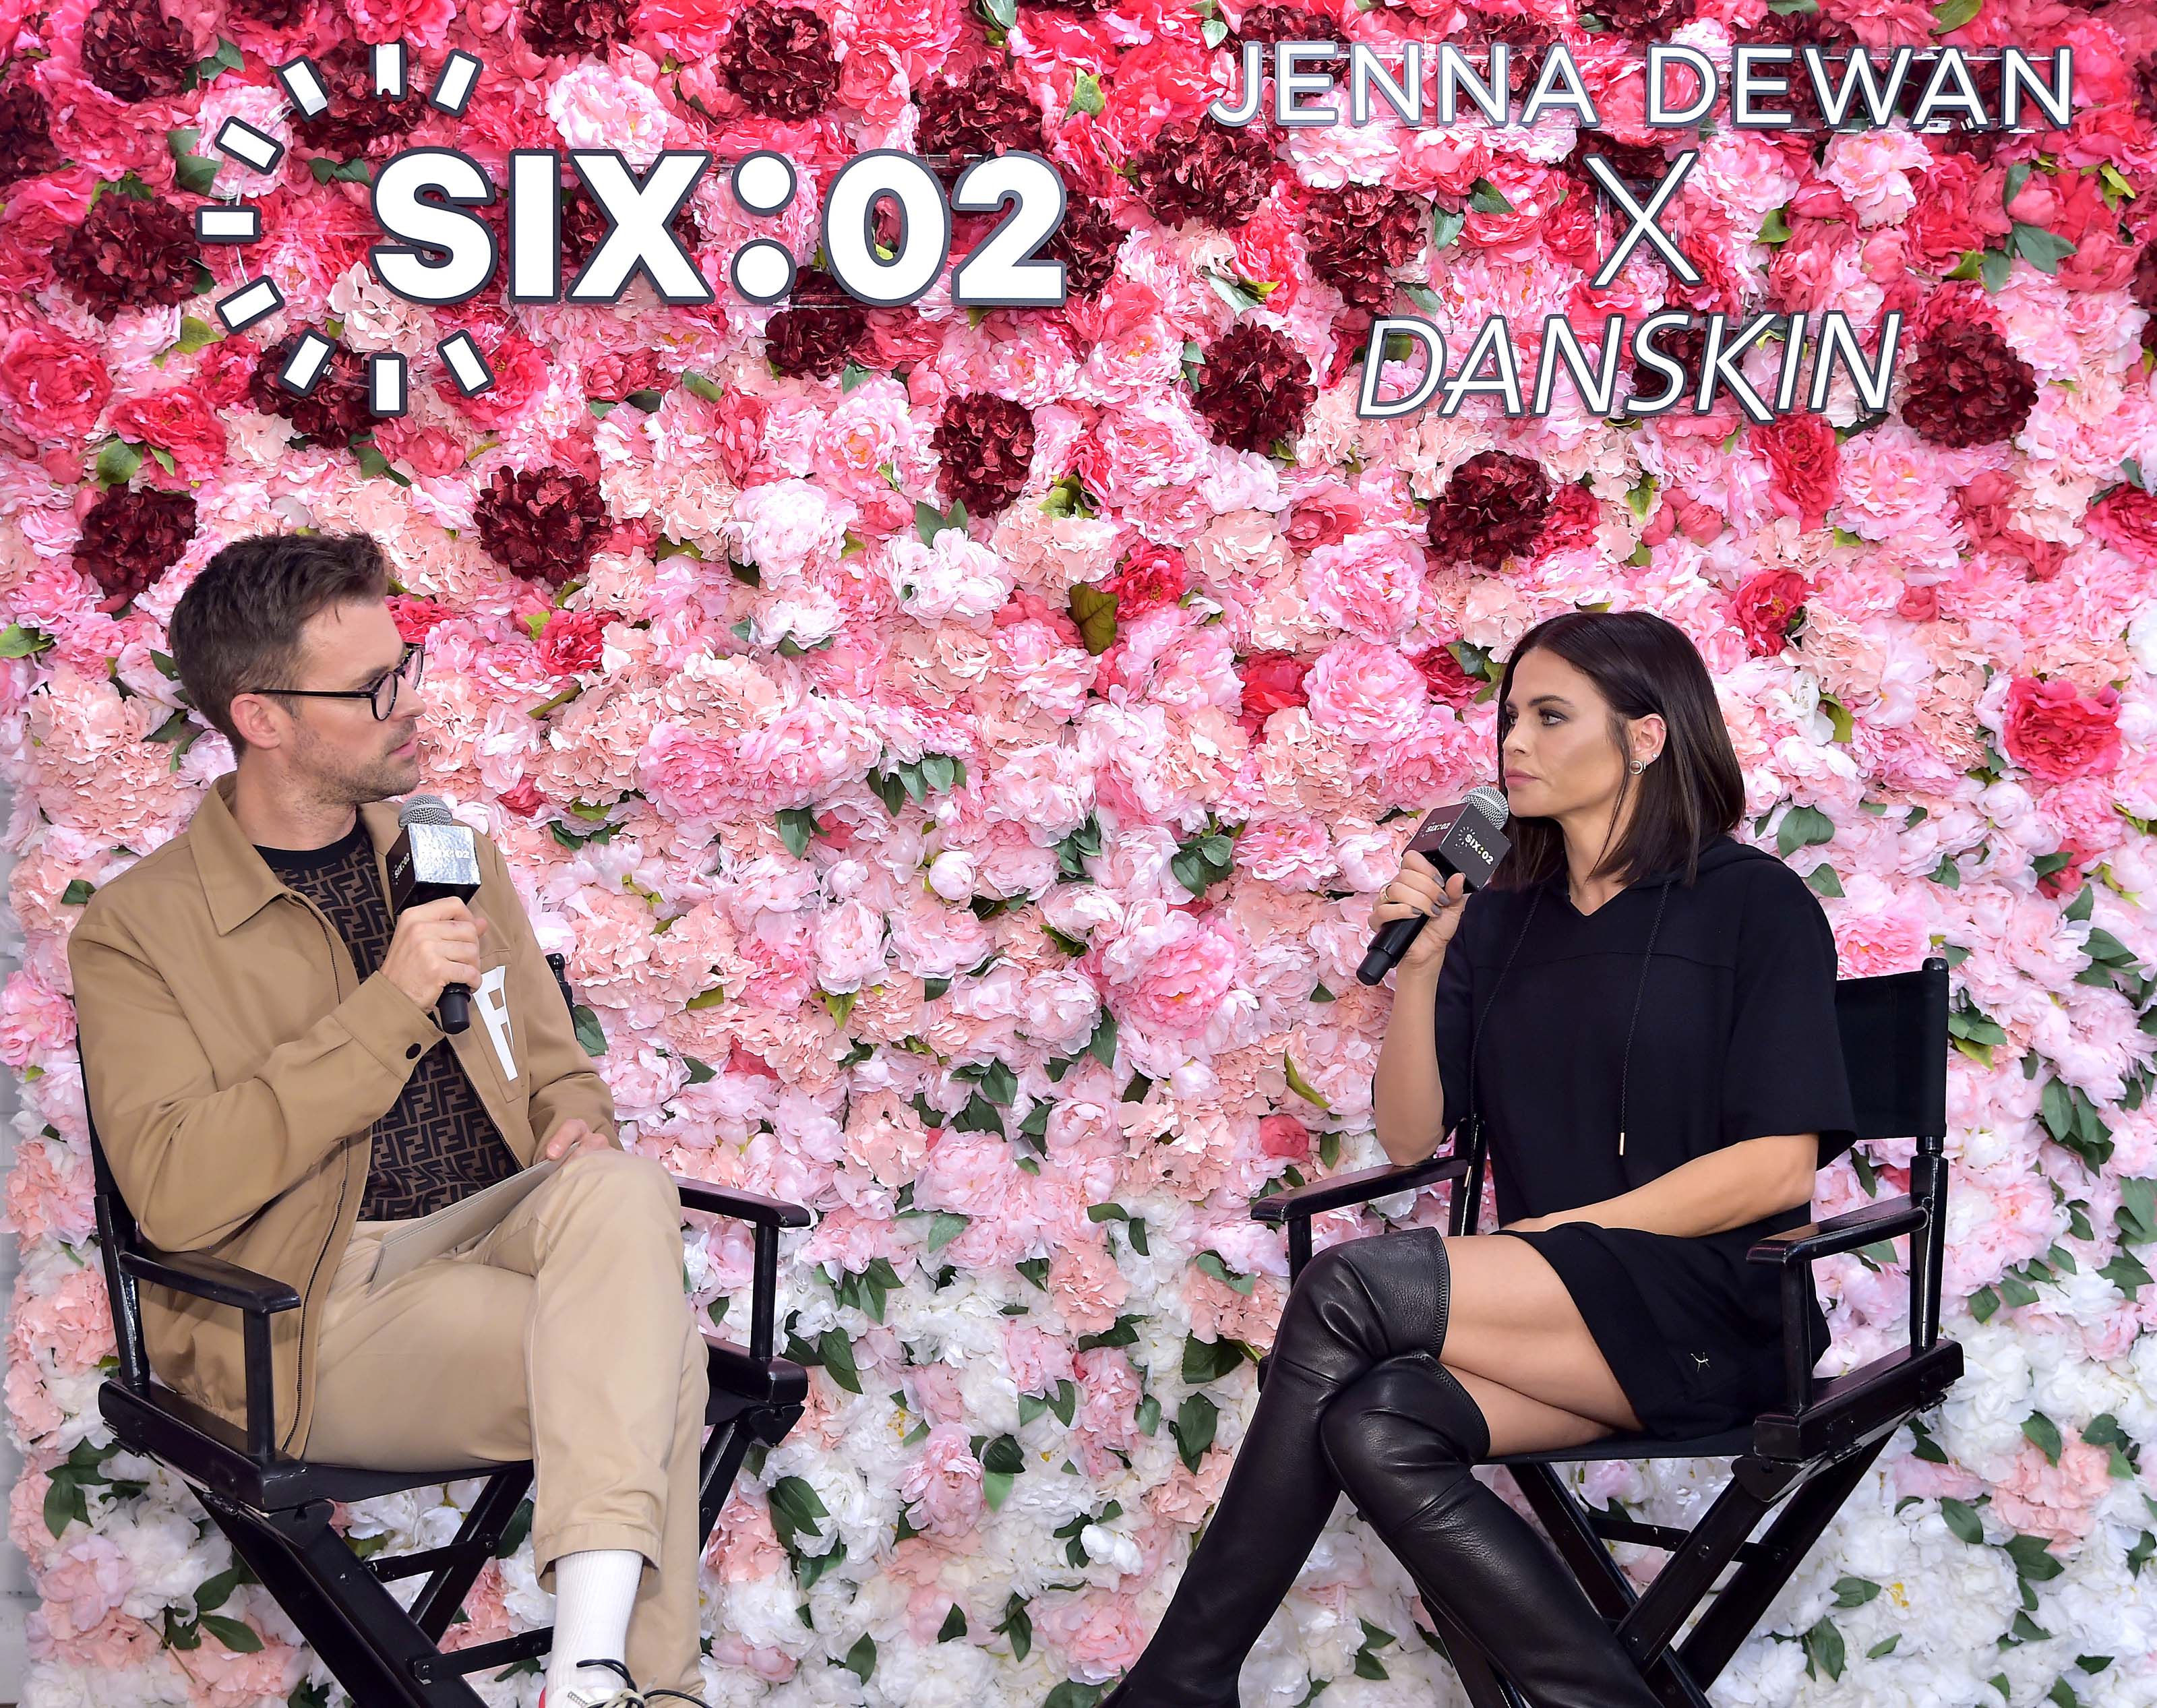 Jenna Dewan attends the Jenna Dewan x Danskin Capsule Launch Event